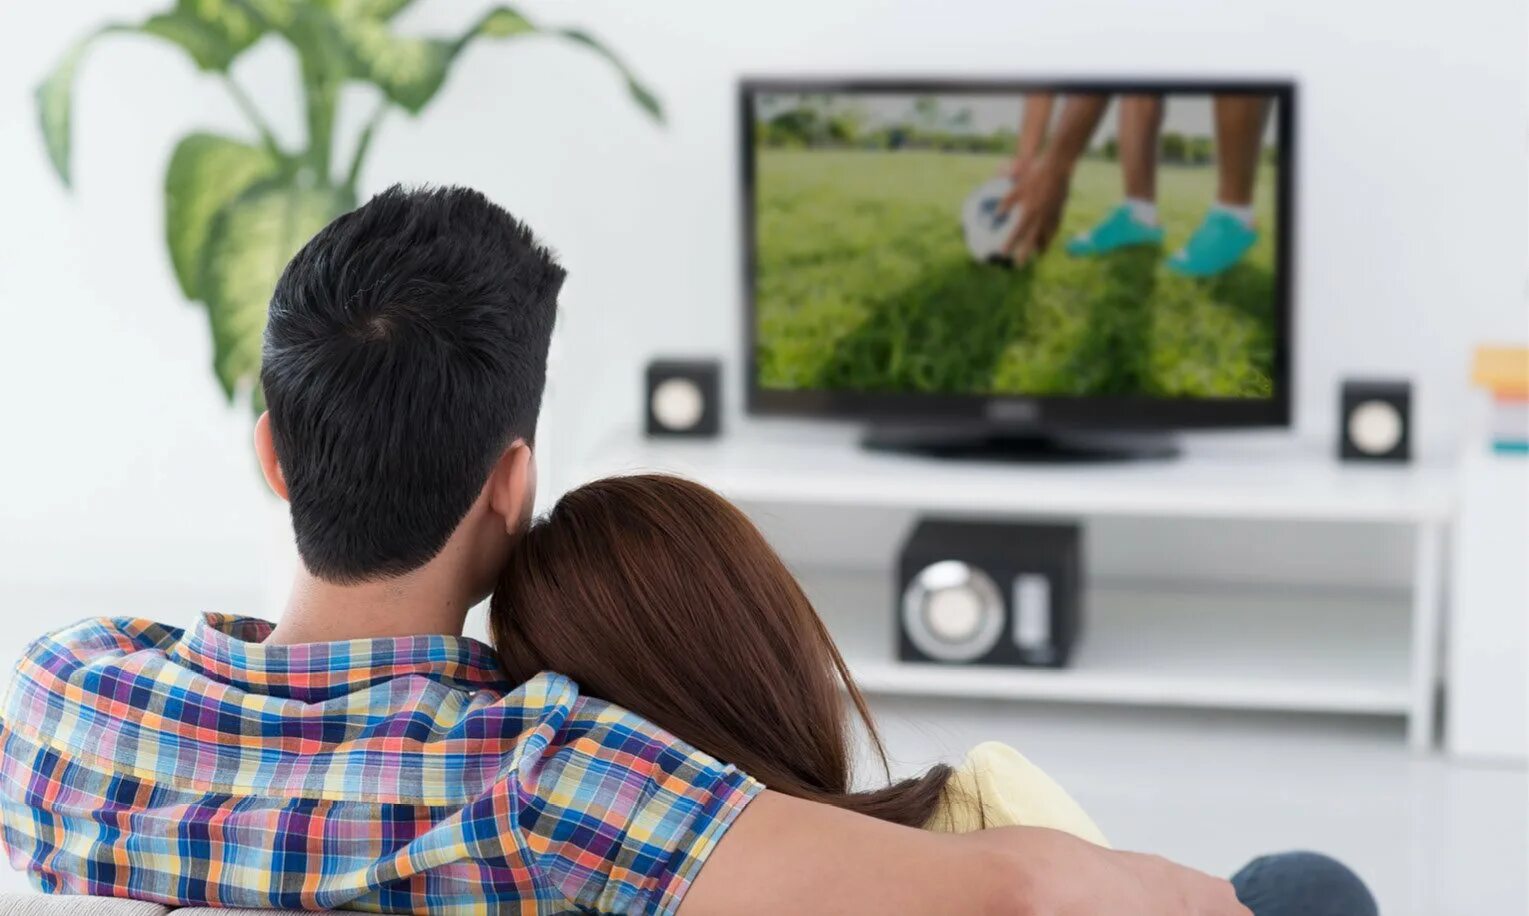 Видео просмотра телевизора. Пара перед телевизором. Девушка перед телевизором. Мужчина у телевизора. Парень с девушкой перед телевизором.